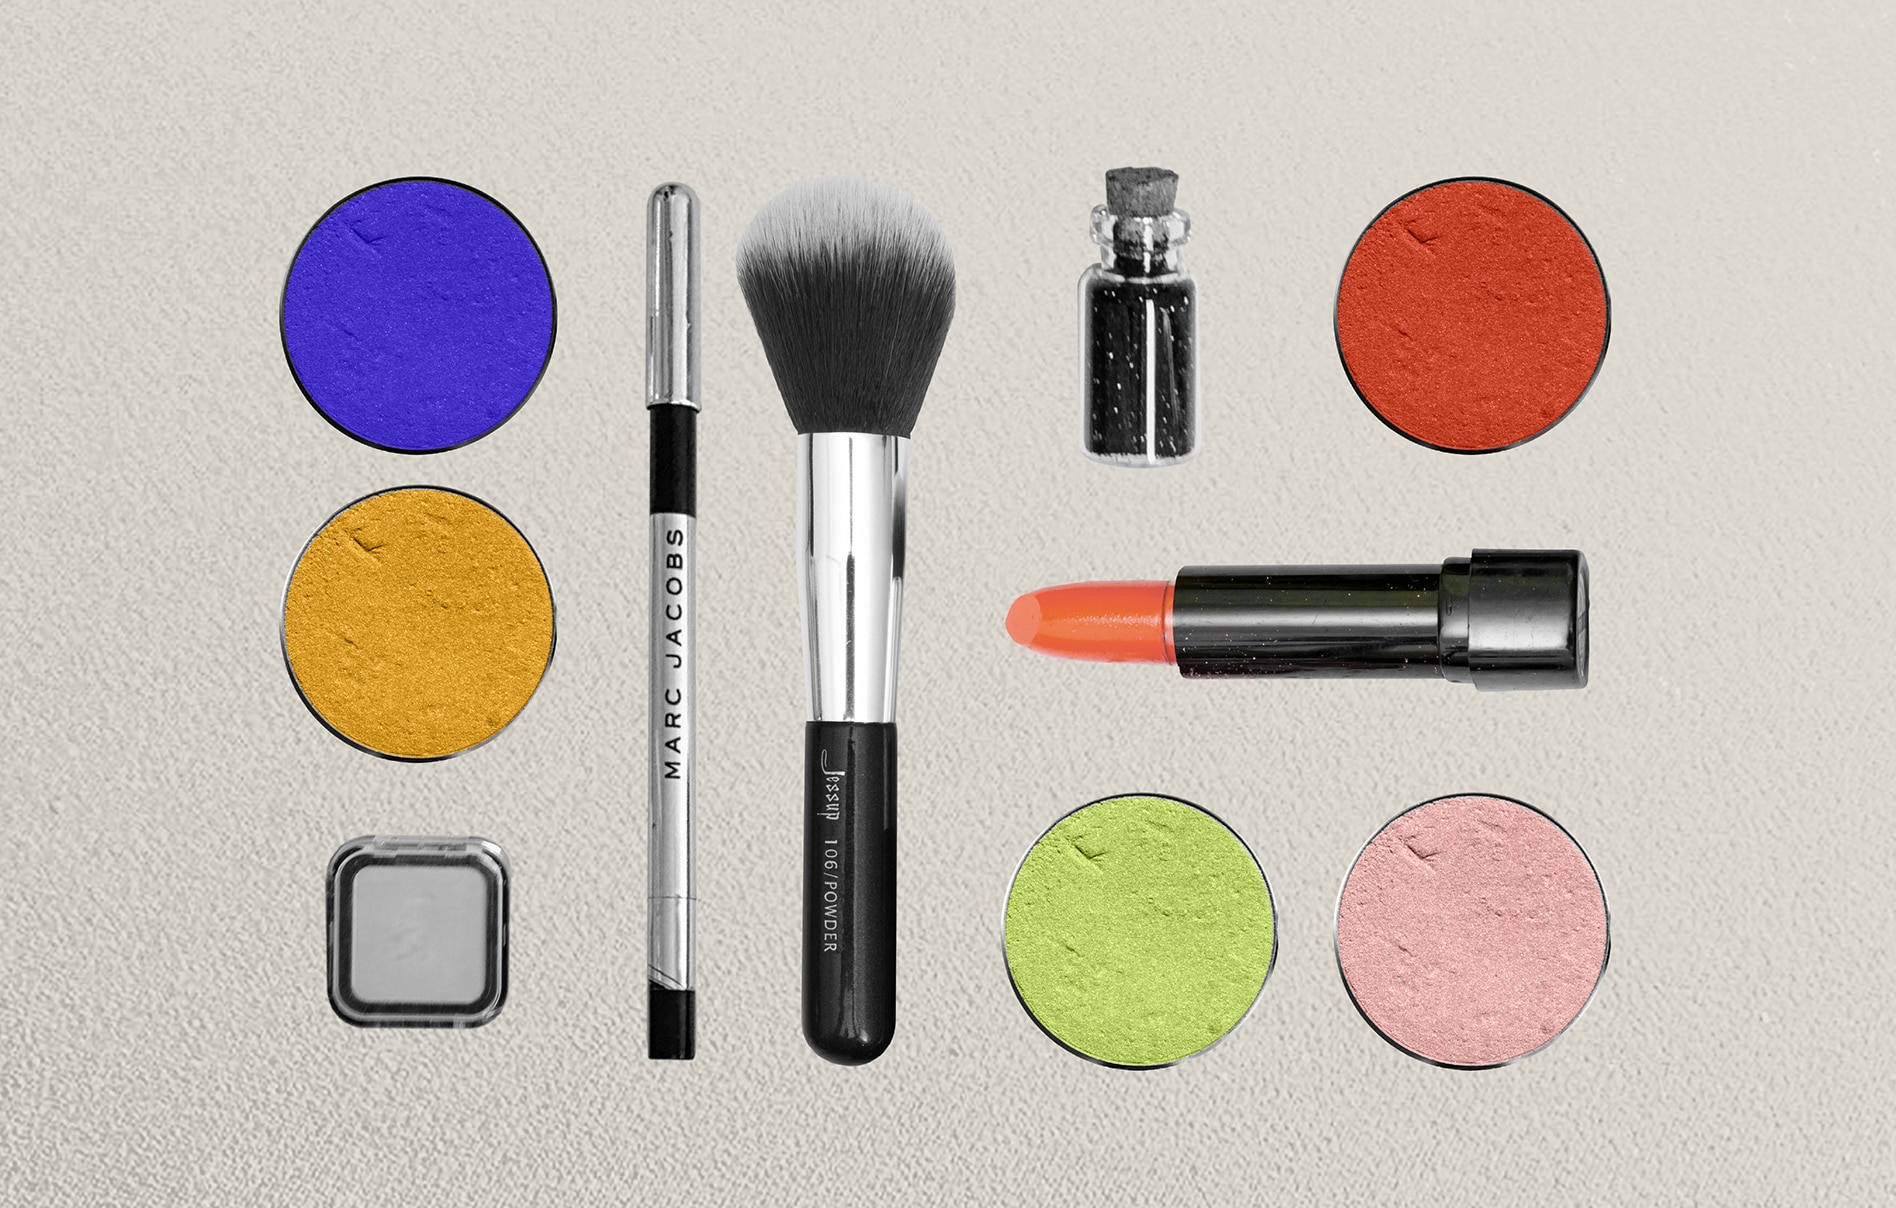 Condensing Your Kit: How to Depot Makeup